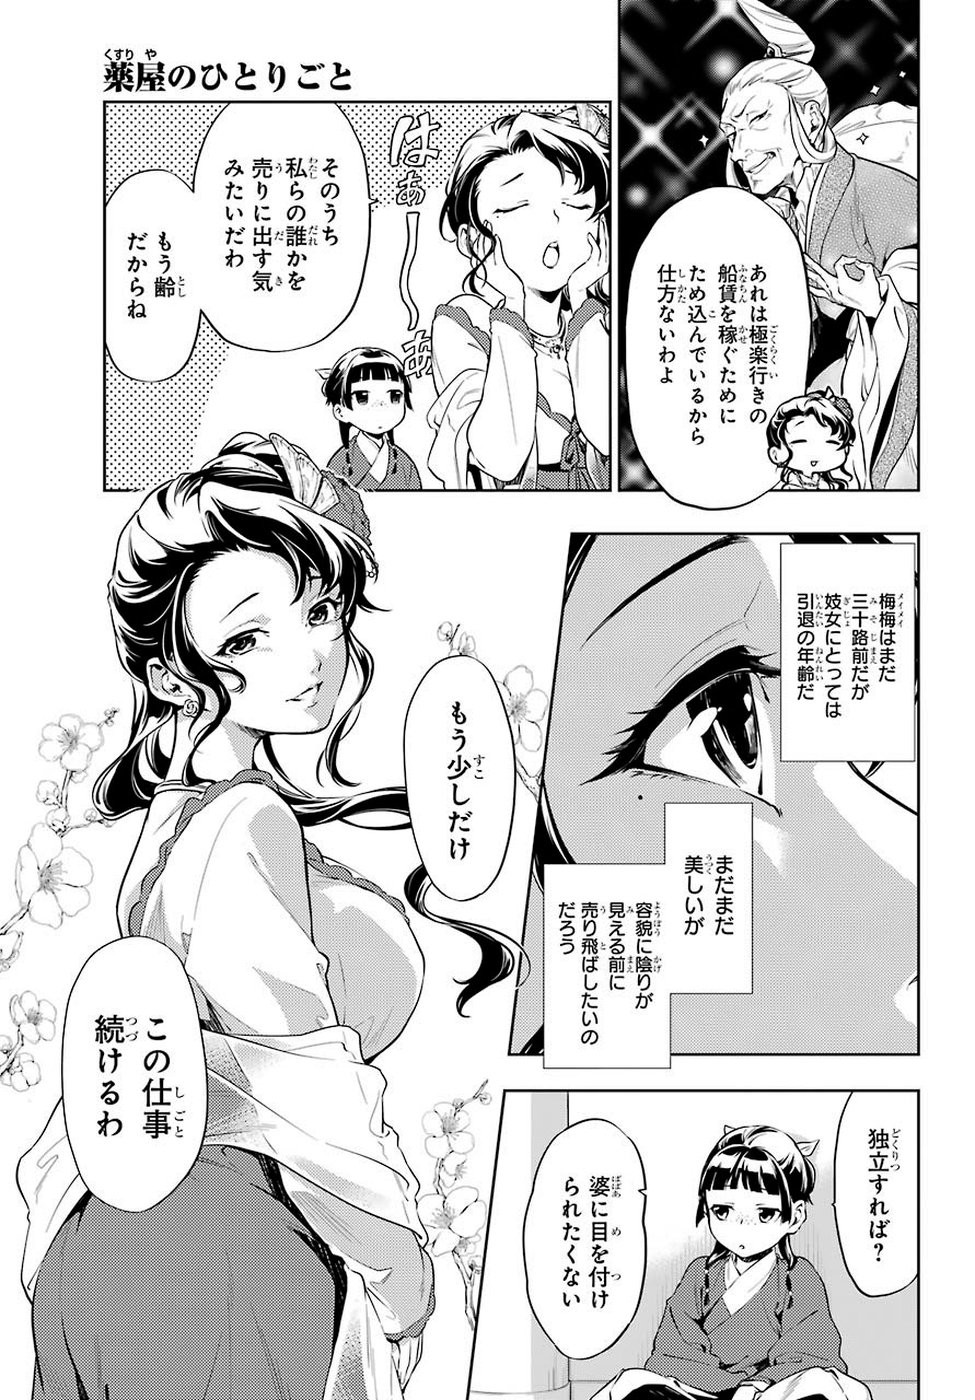 Kusuriya no Hitorigoto - Chapter 29.1 - Page 3